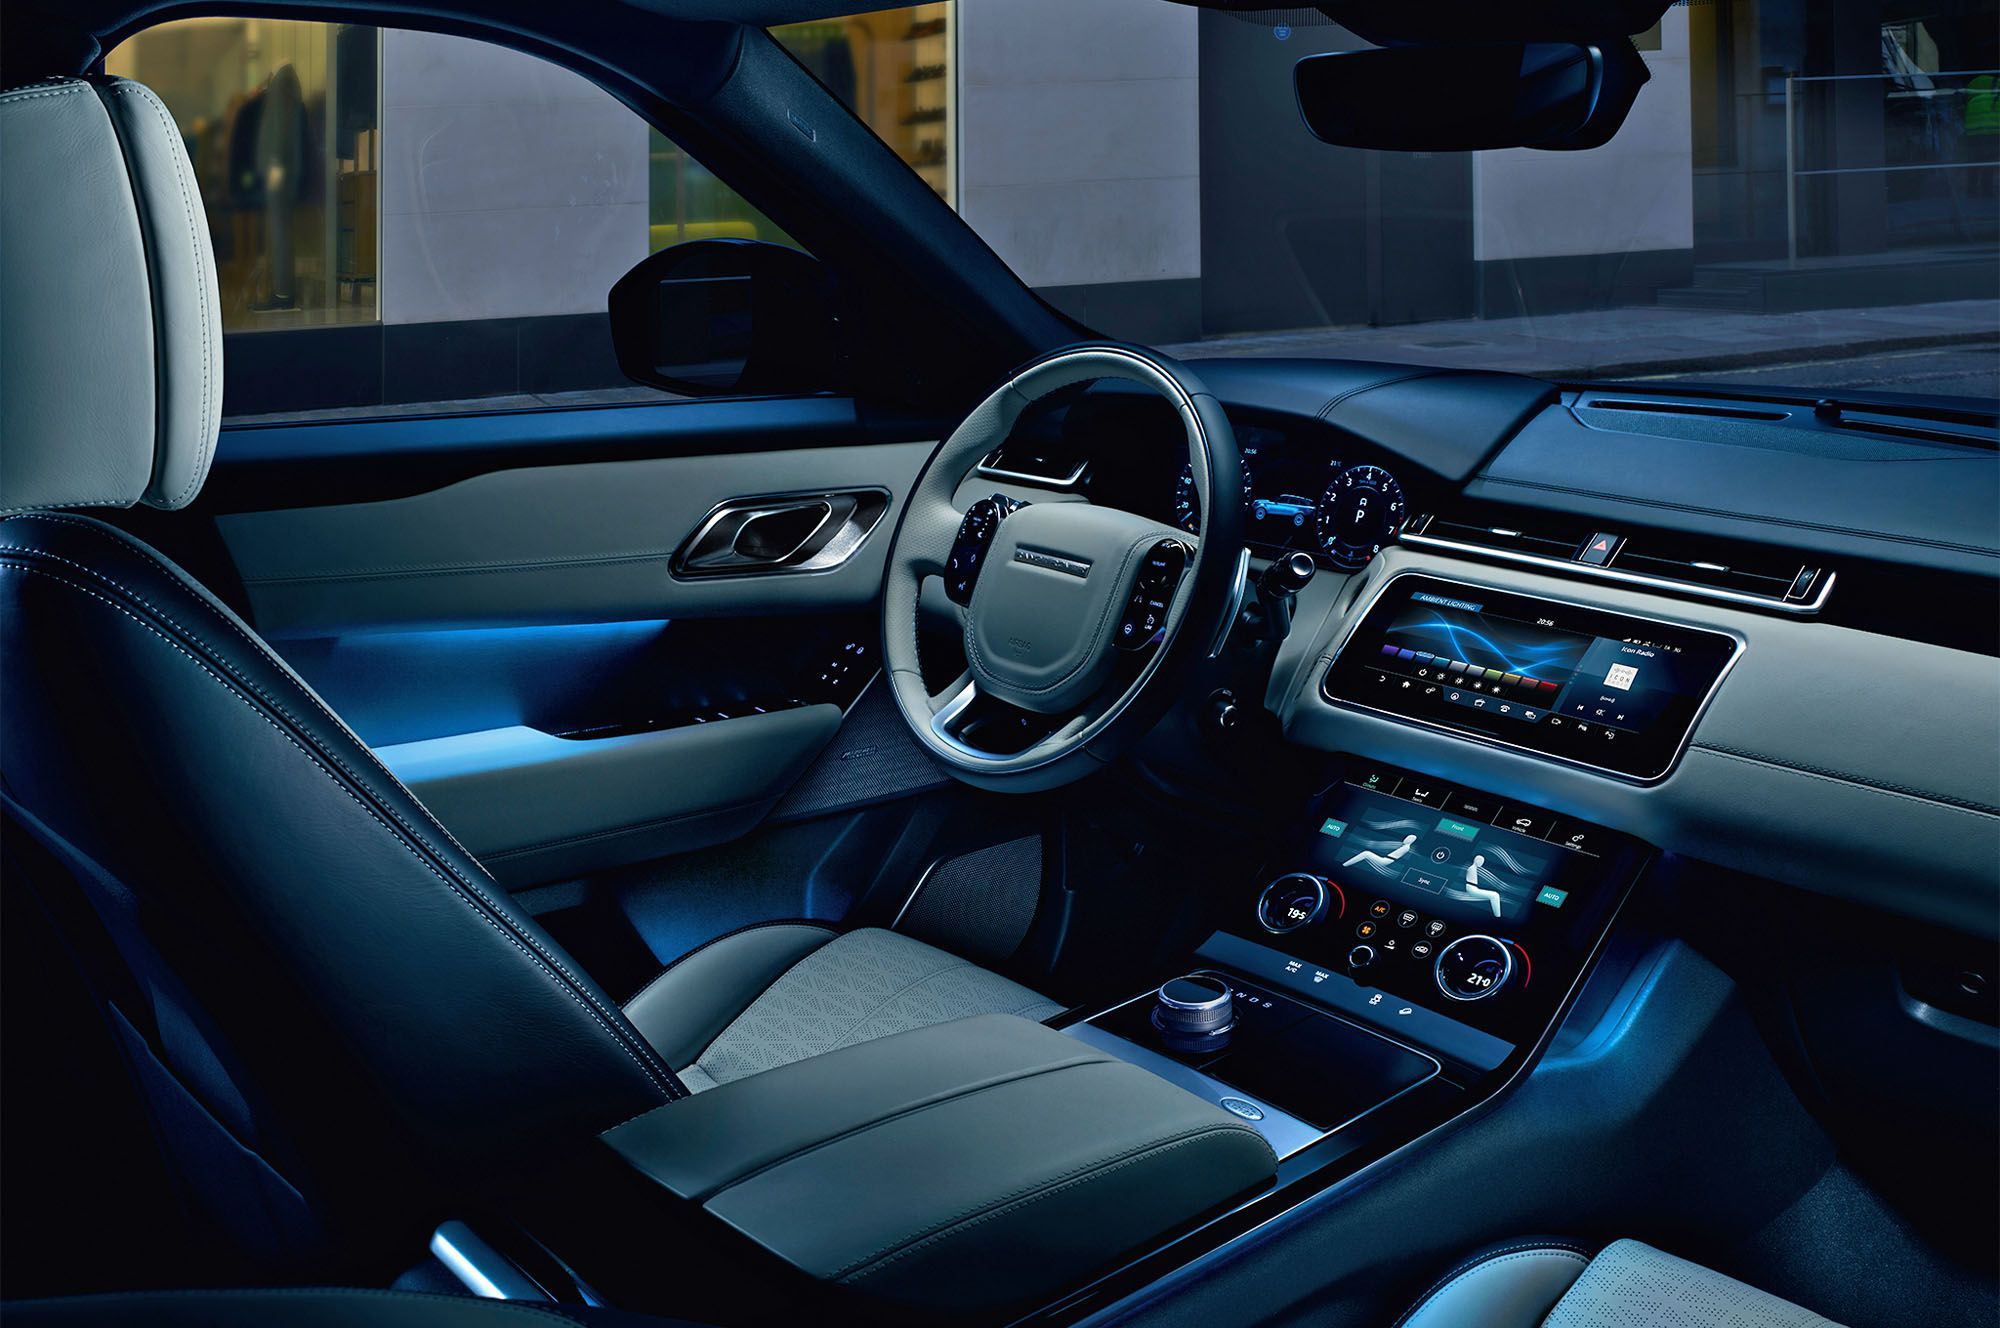 Range Rover Velar Interior Picture. Luxury cars range rover